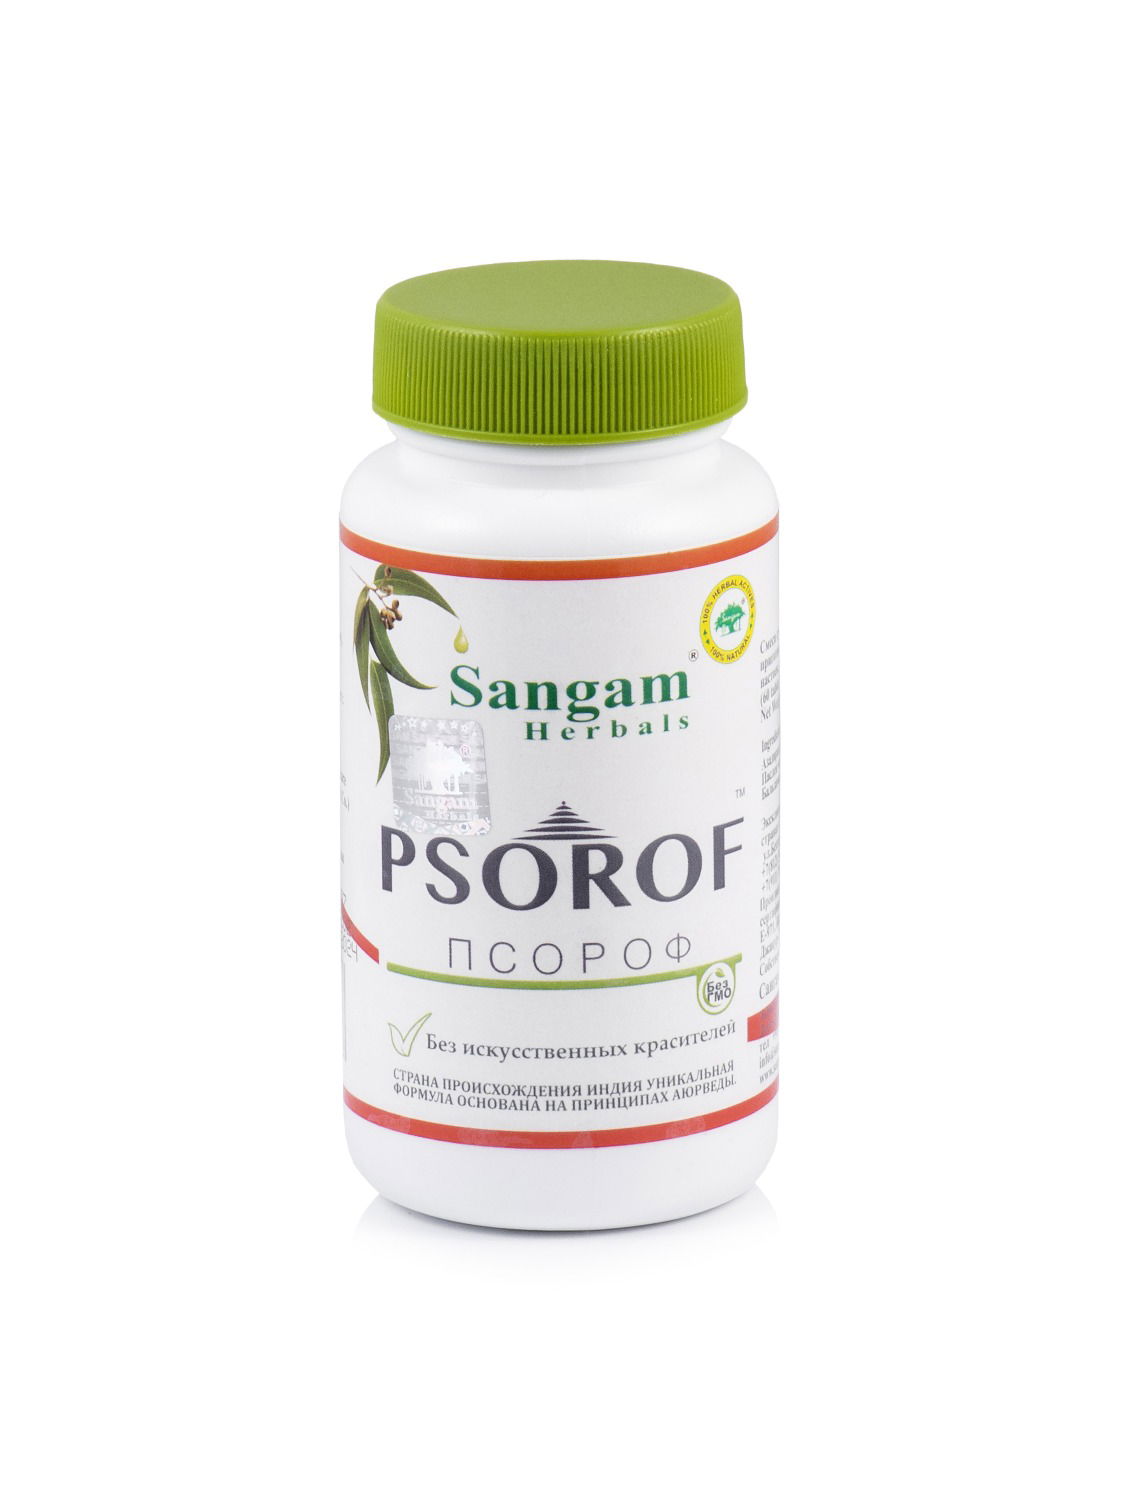 Псороф Sangam Herbals (60 таблеток). 